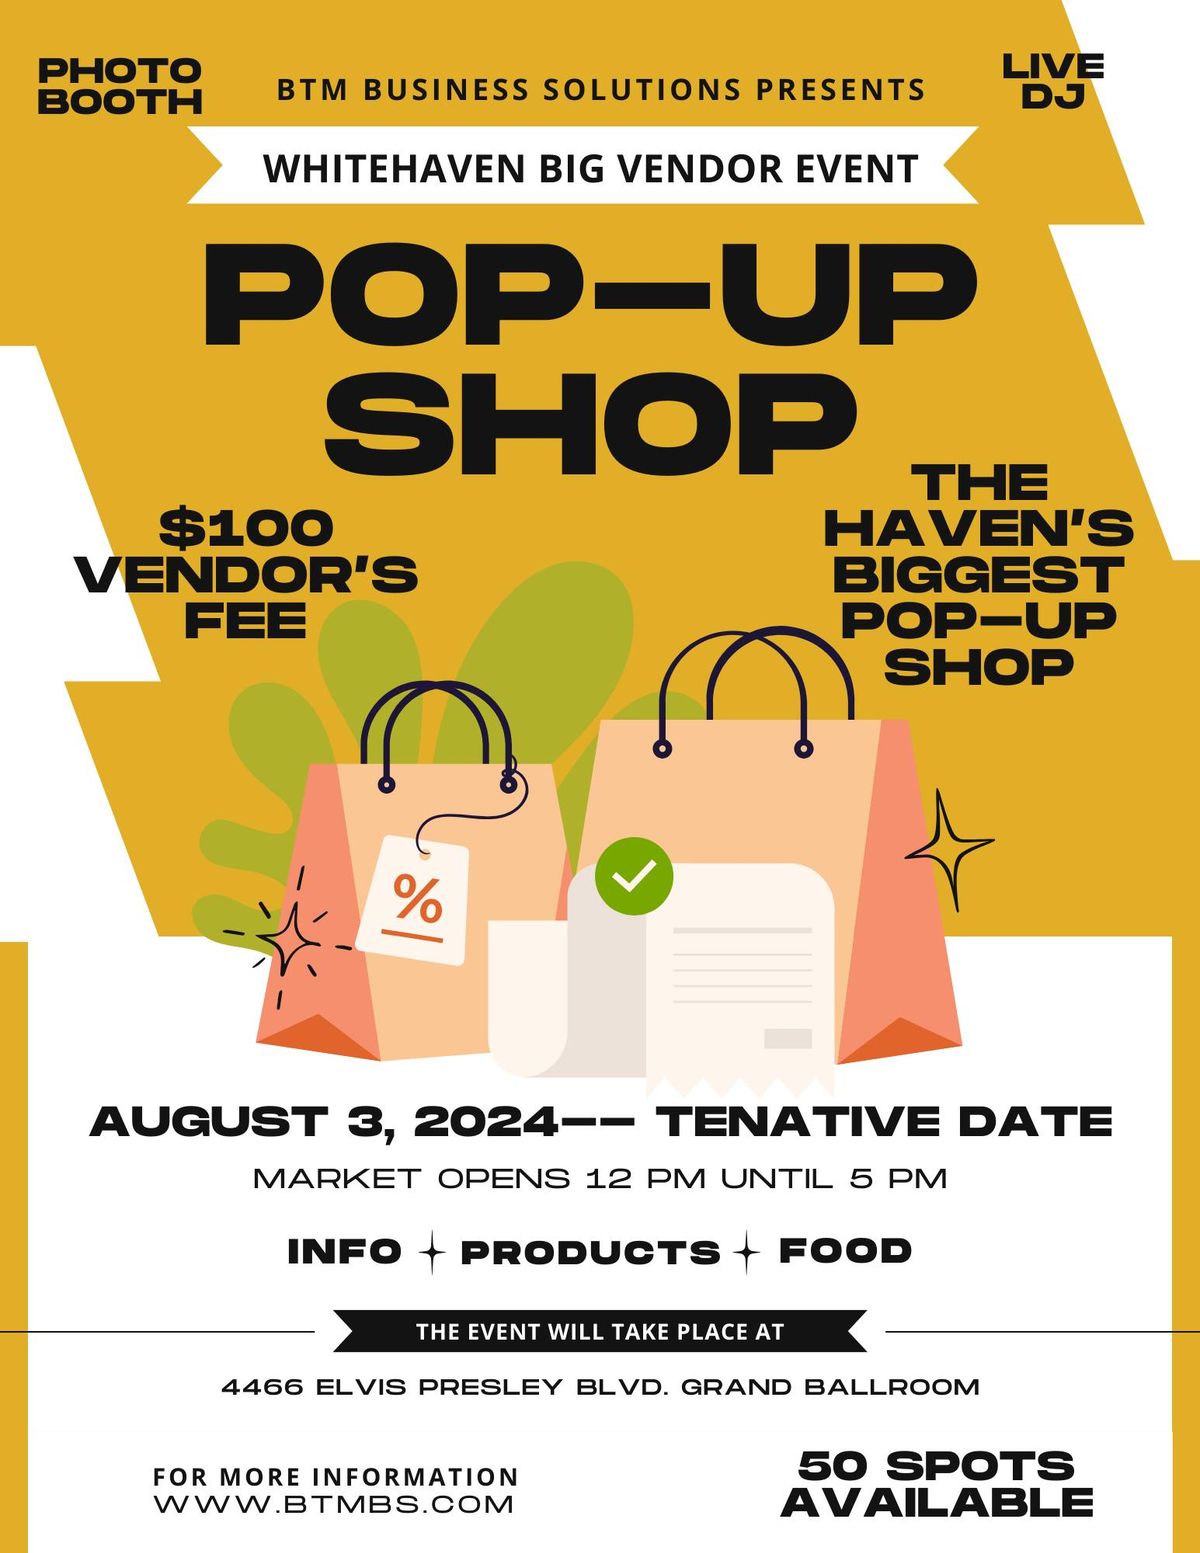 Whitehaven "Big Vendor" Event (Pop-Up Shop)